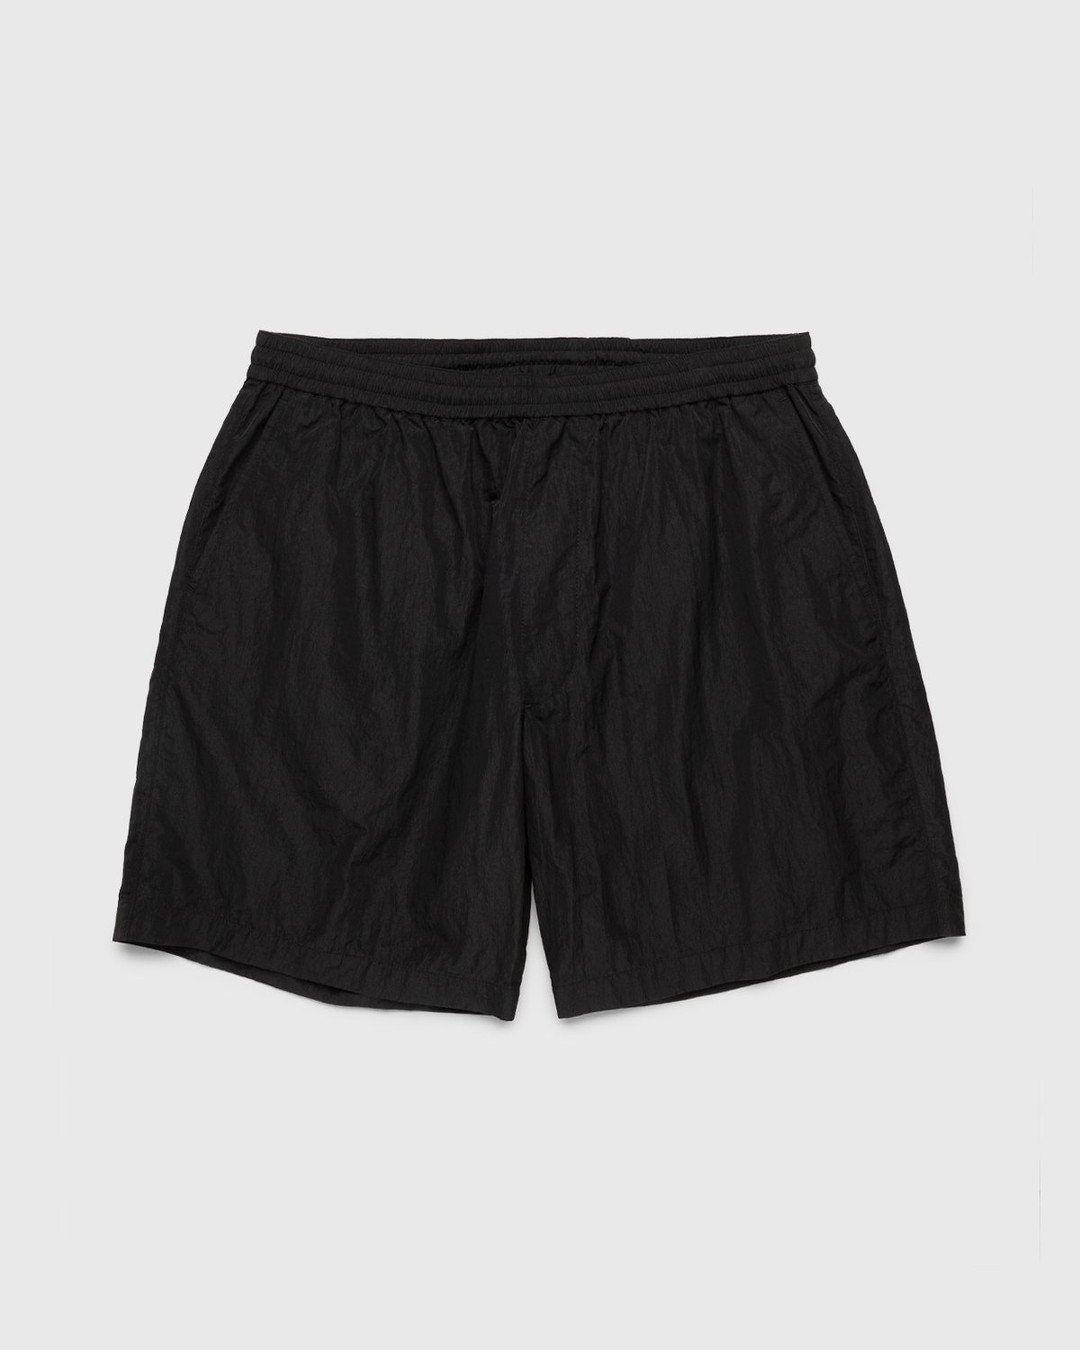 Highsnobiety – Crepe Nylon Shorts Black - Shorts - Black - Image 1